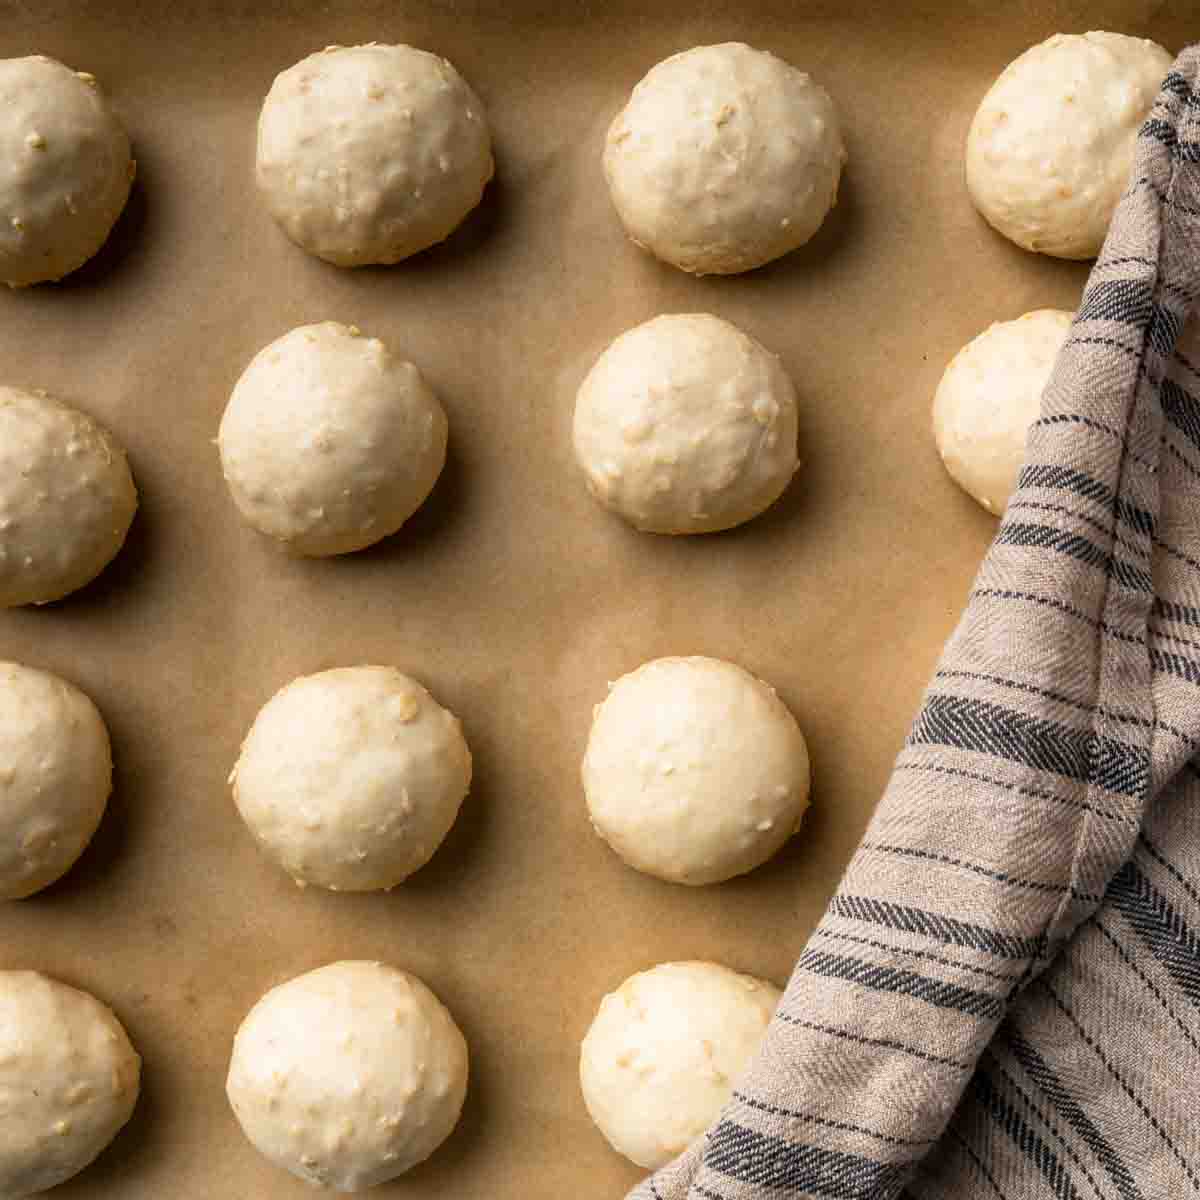 Balls of oatmeal roll dough lined up on a baking sheet